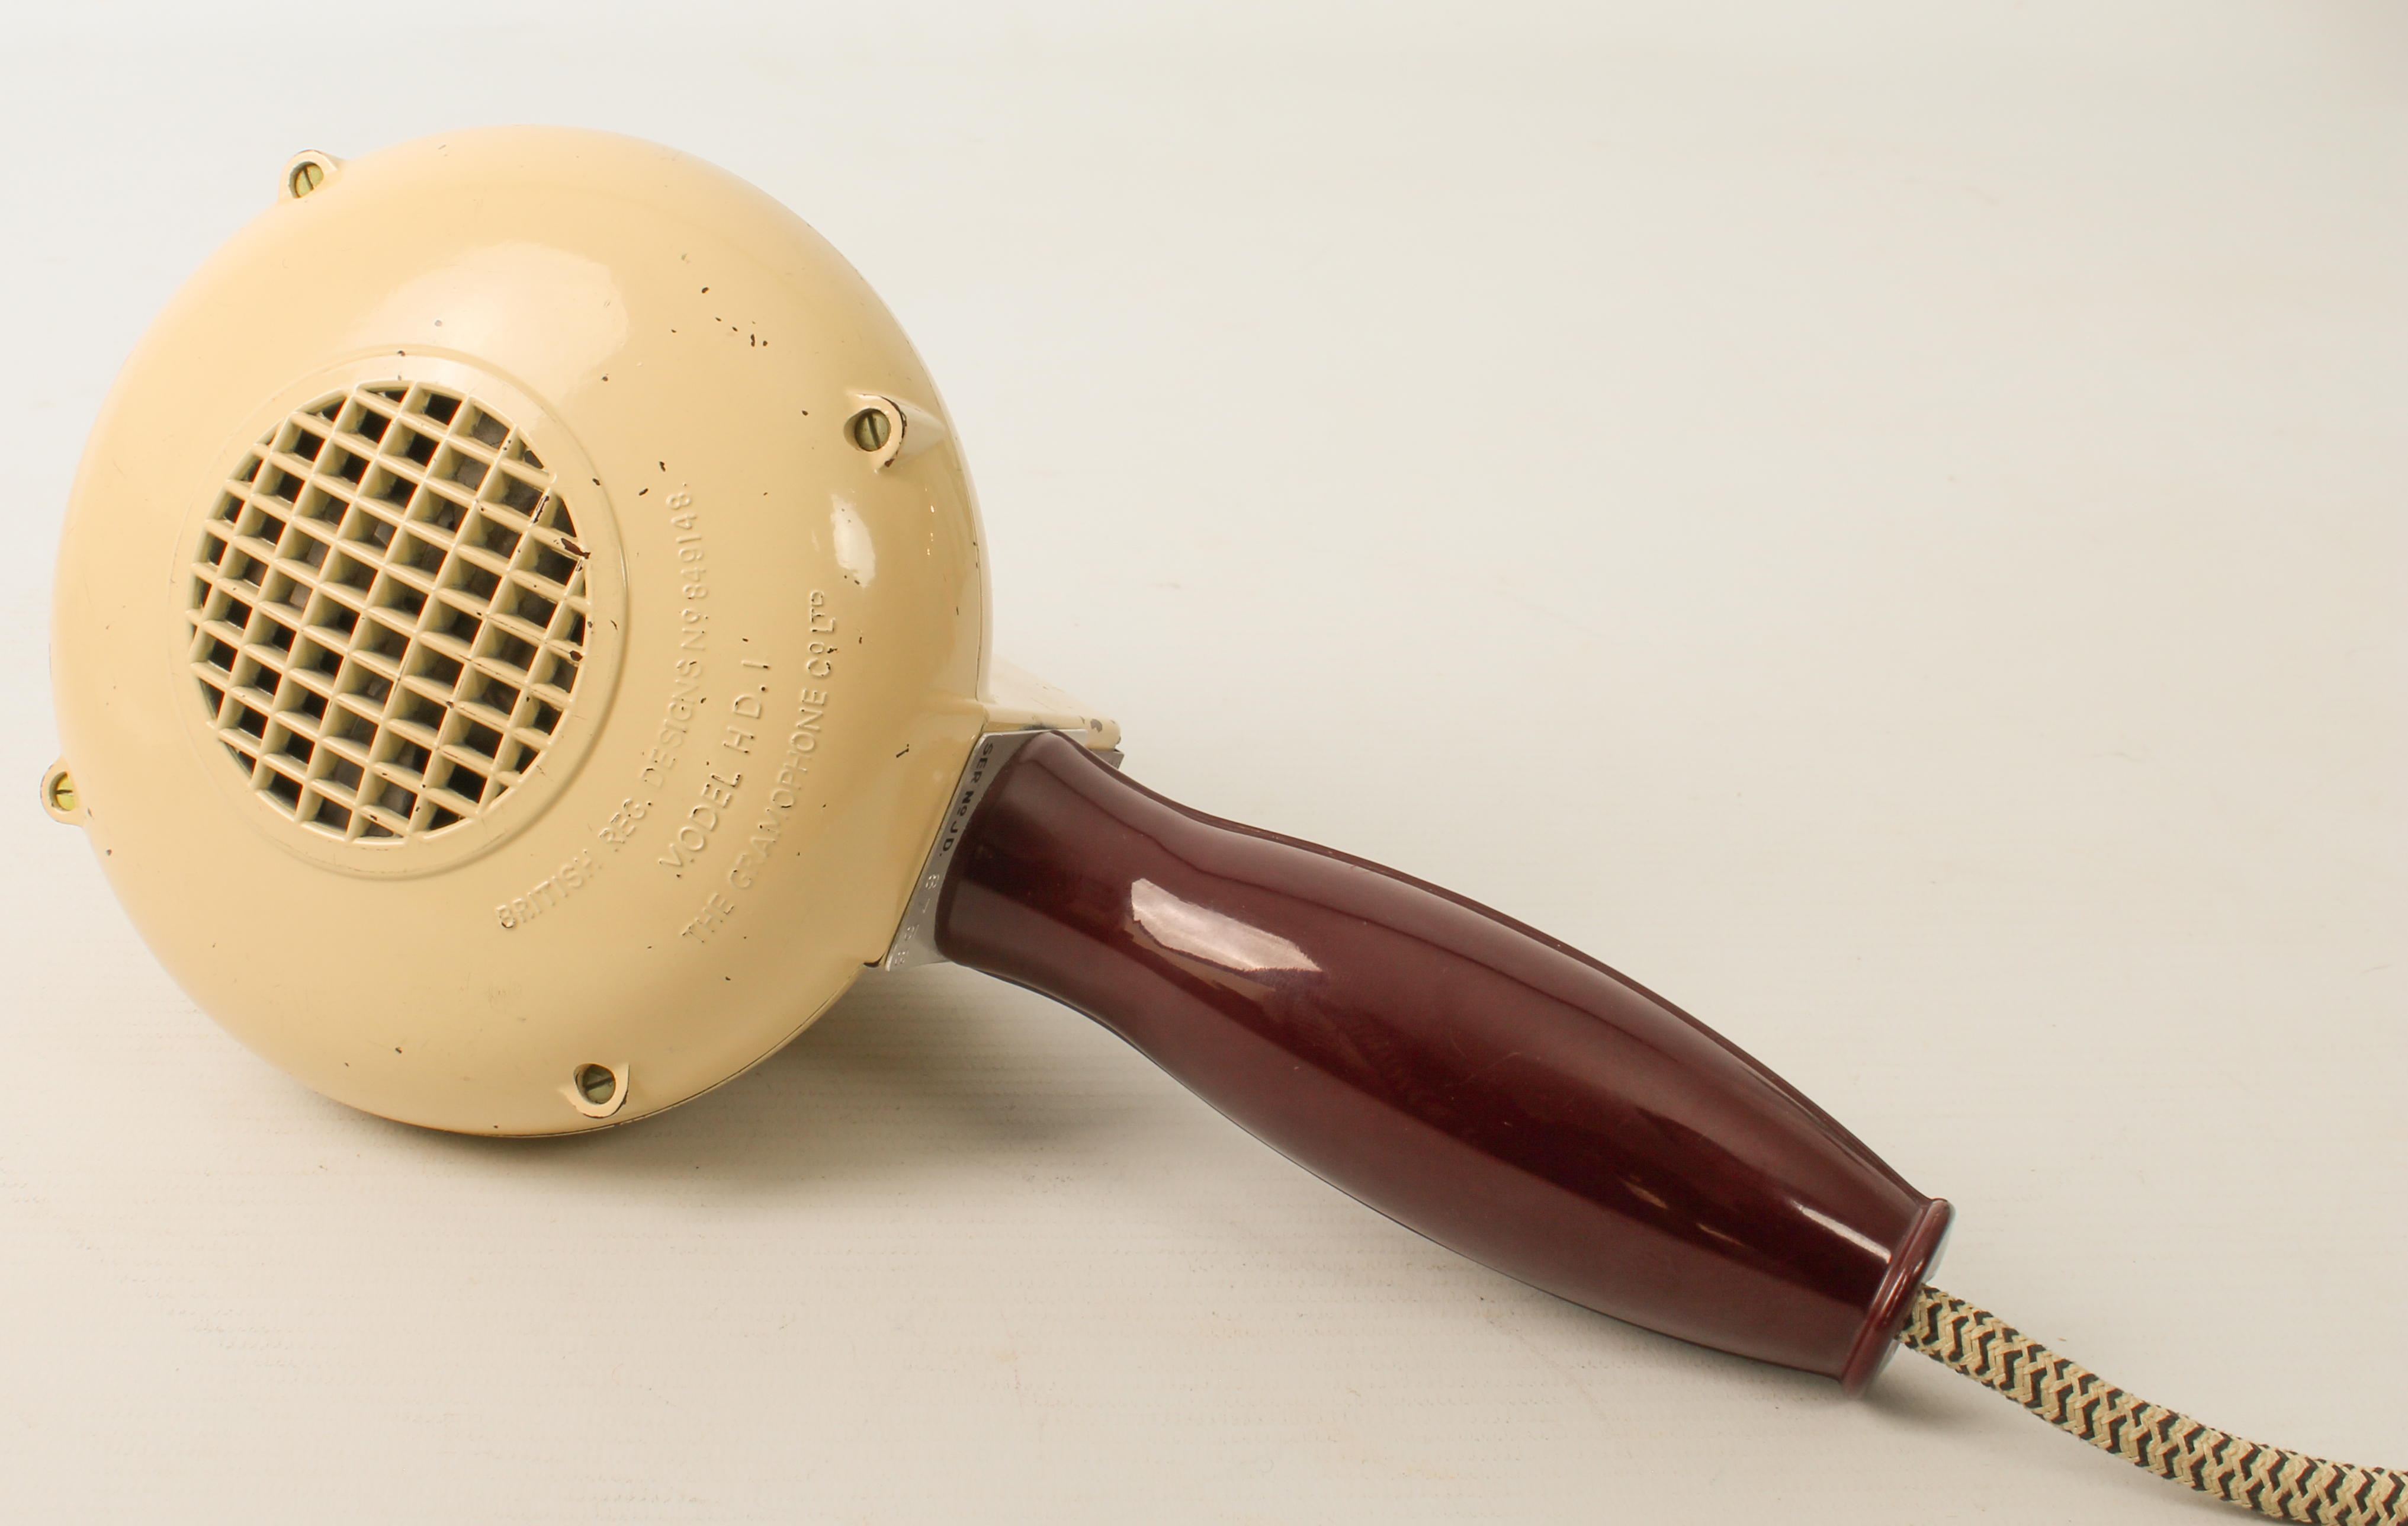 A vintage bakelite hairdryer by the Gramophone Co. Ltd. HMV - model HD1, 1930s-40s, maroon